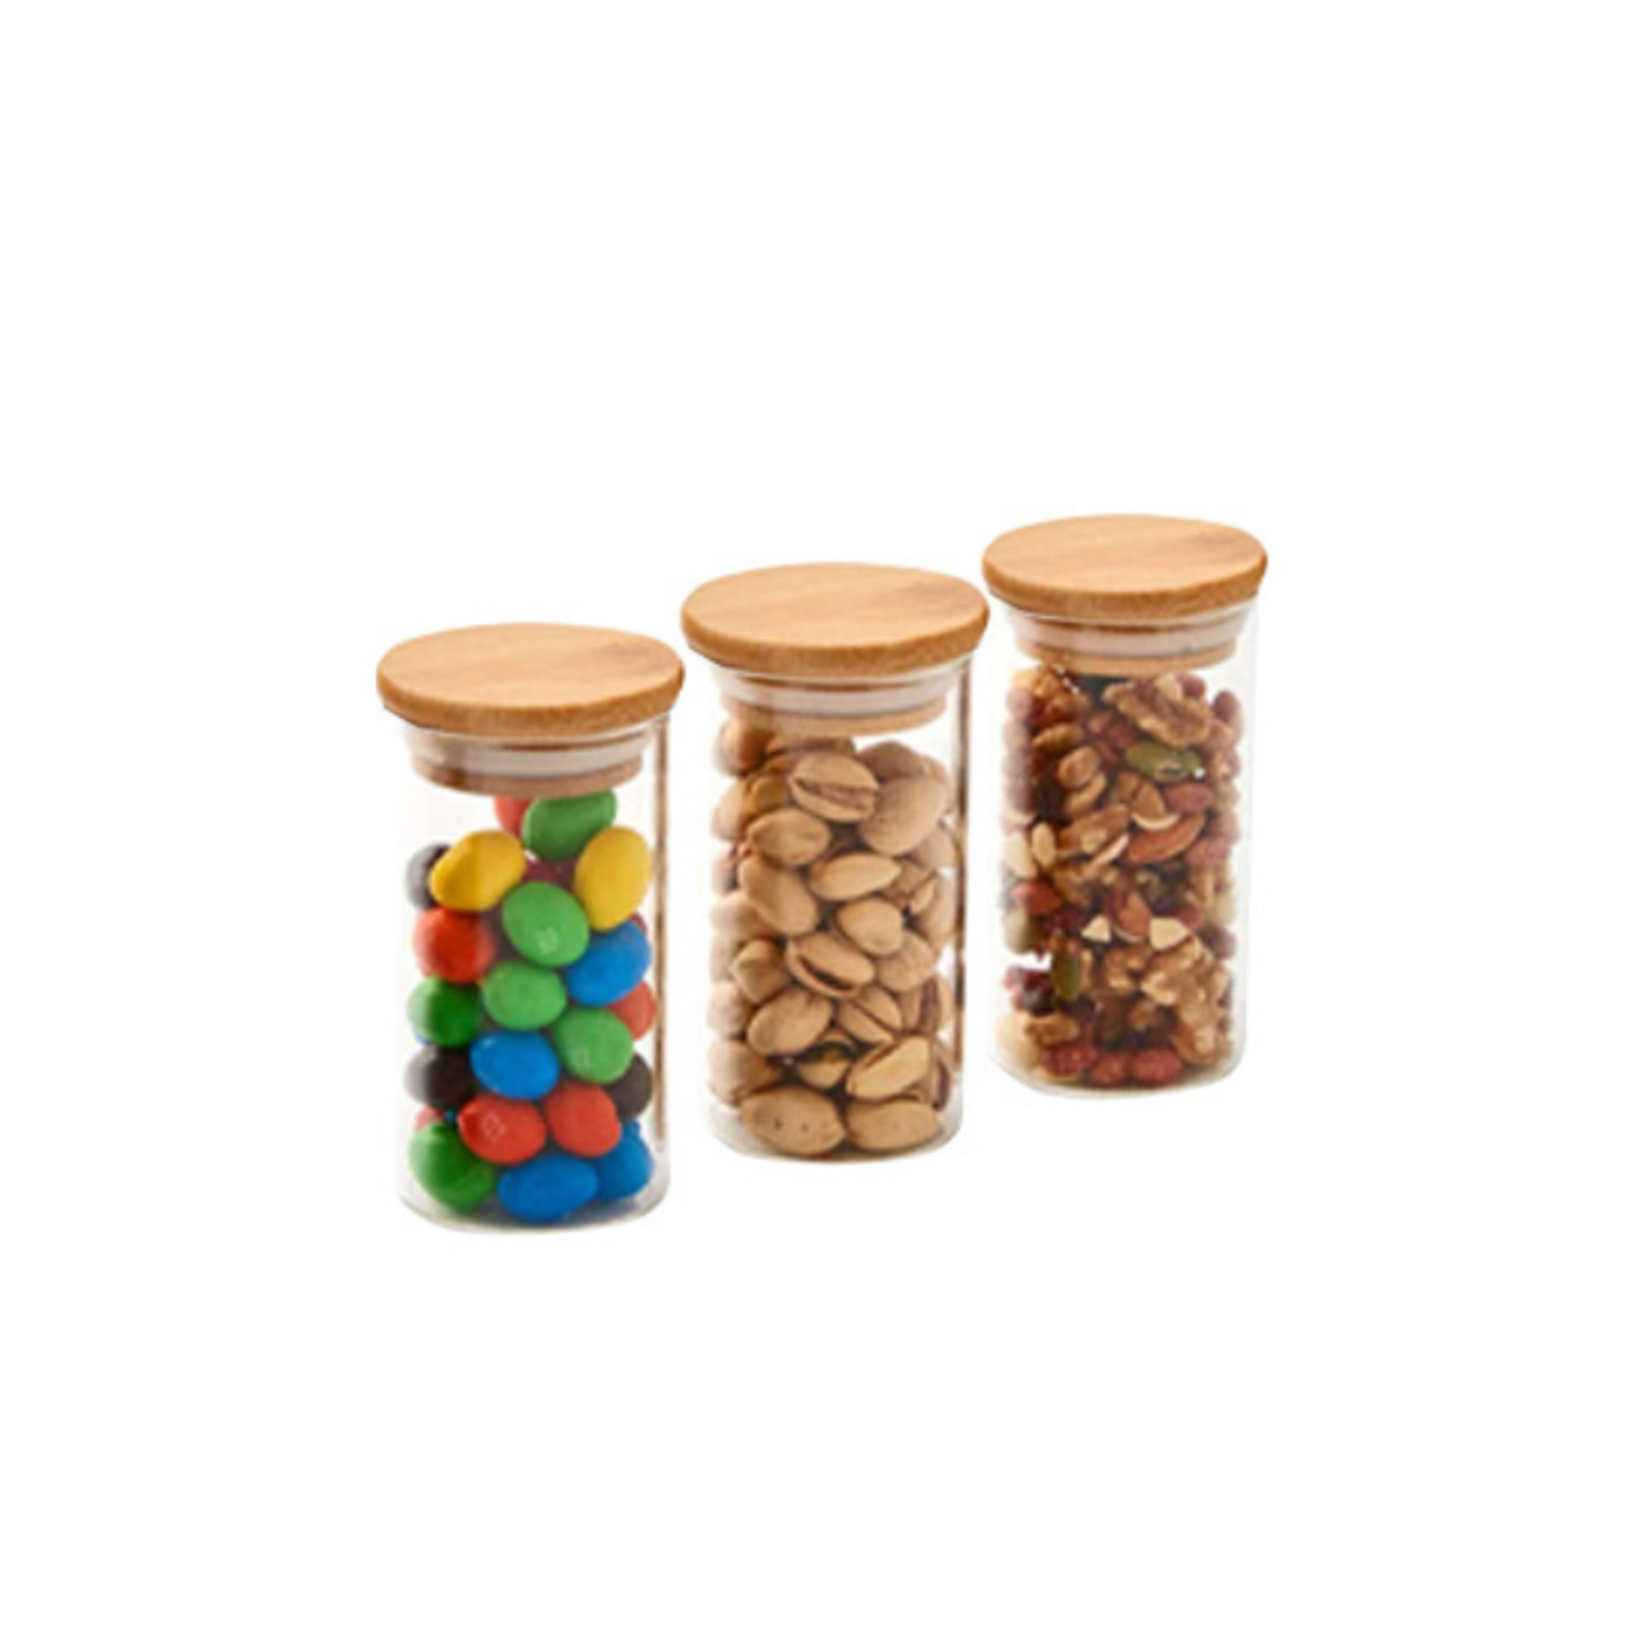 https://cdn.shoplightspeed.com/shops/654658/files/46931866/1652x1652x1/willdan-glass-spice-jars-set-3-pack.jpg